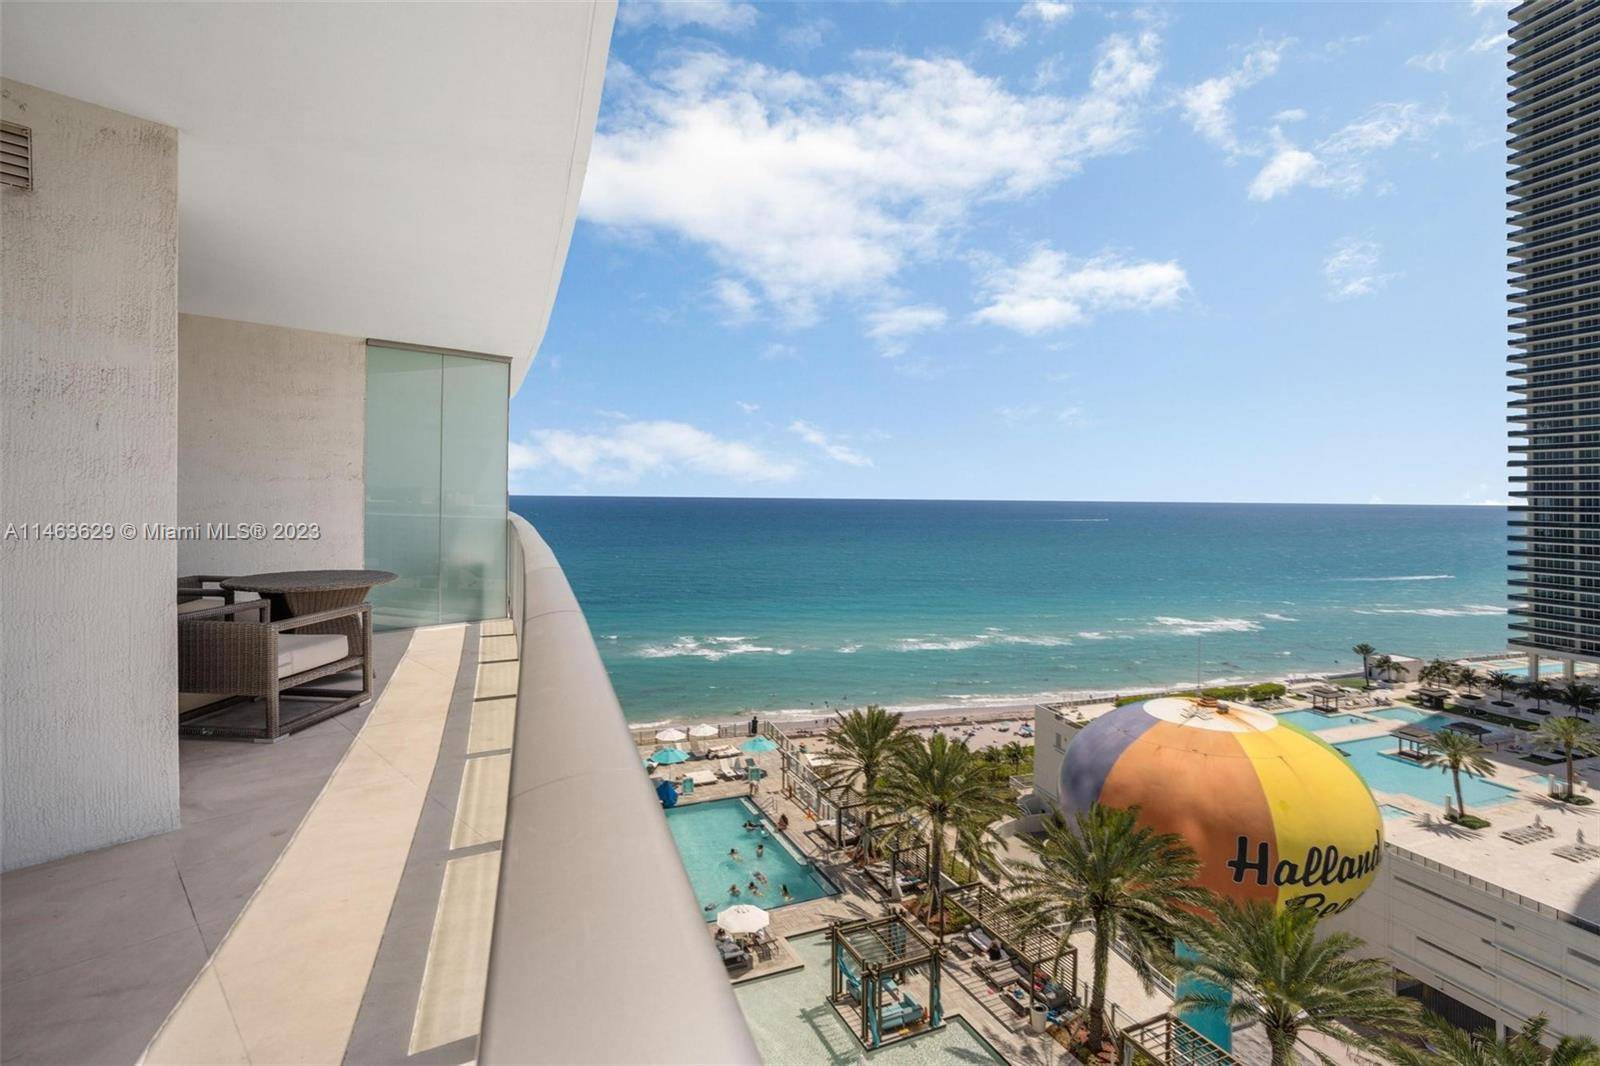 The Hyde Resort Residences reimagines the modern American beach retreat.